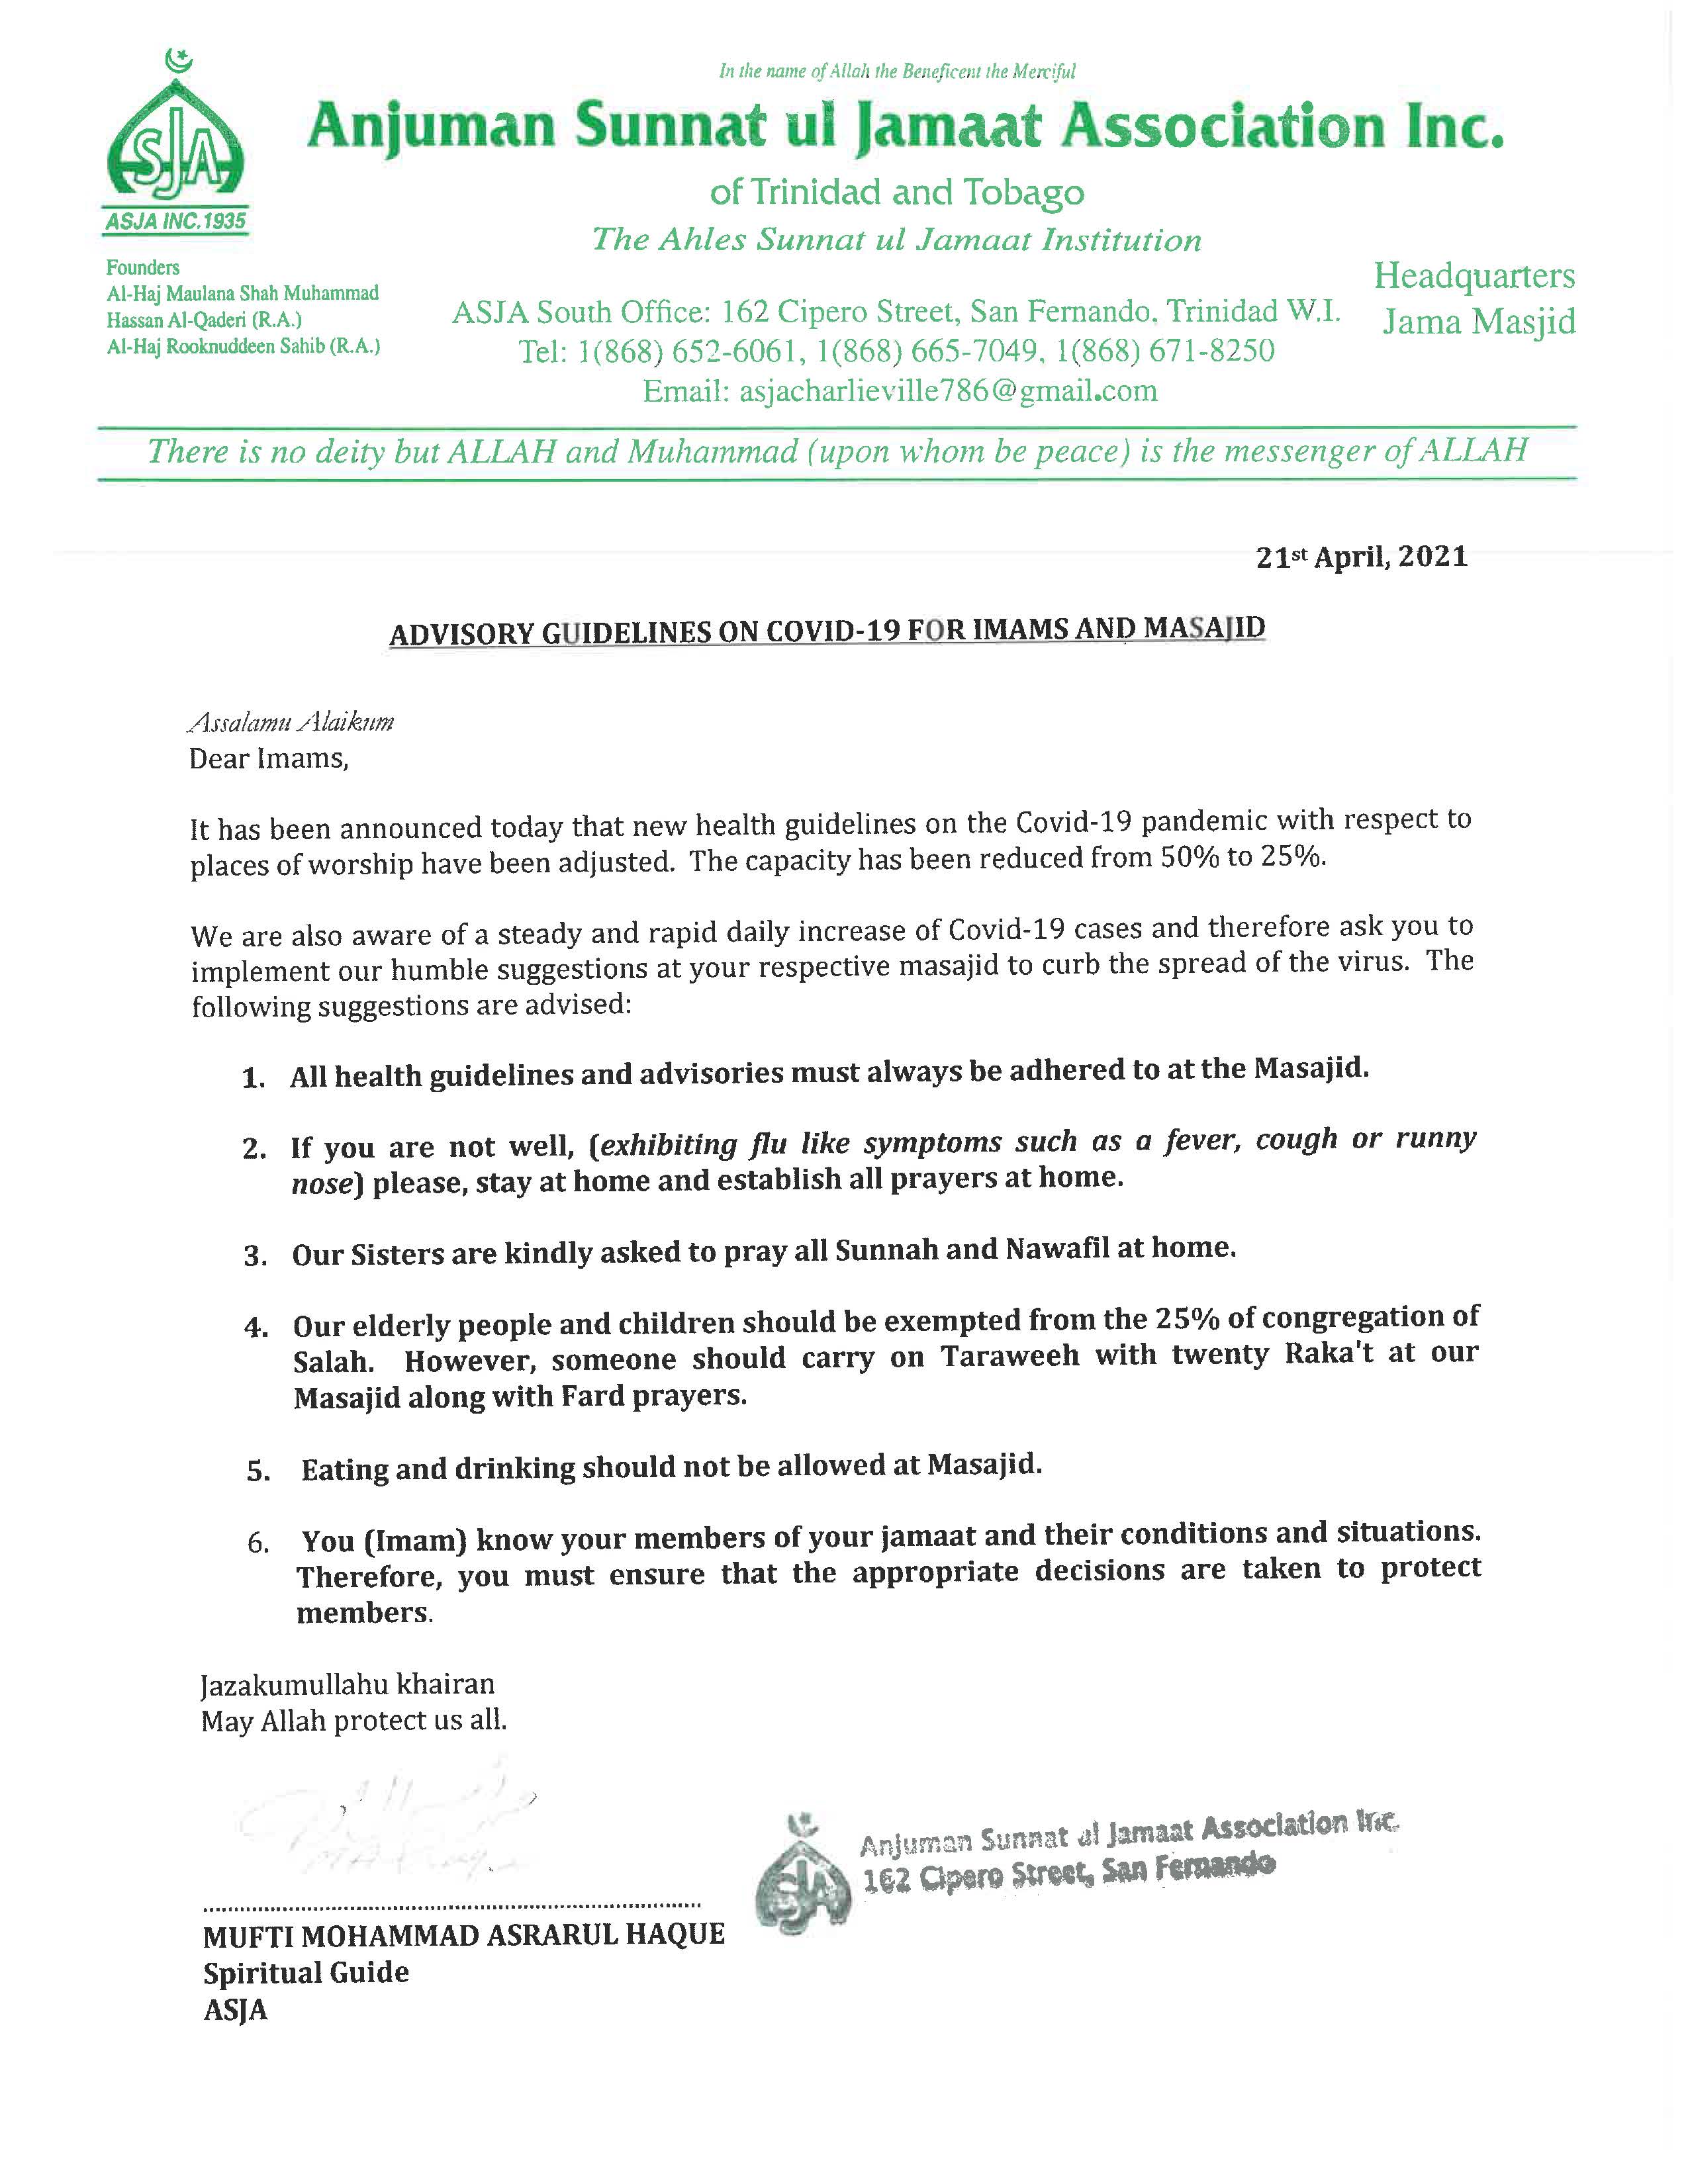 Advisory Guidelines for Taraweeh and Ramadan 2021